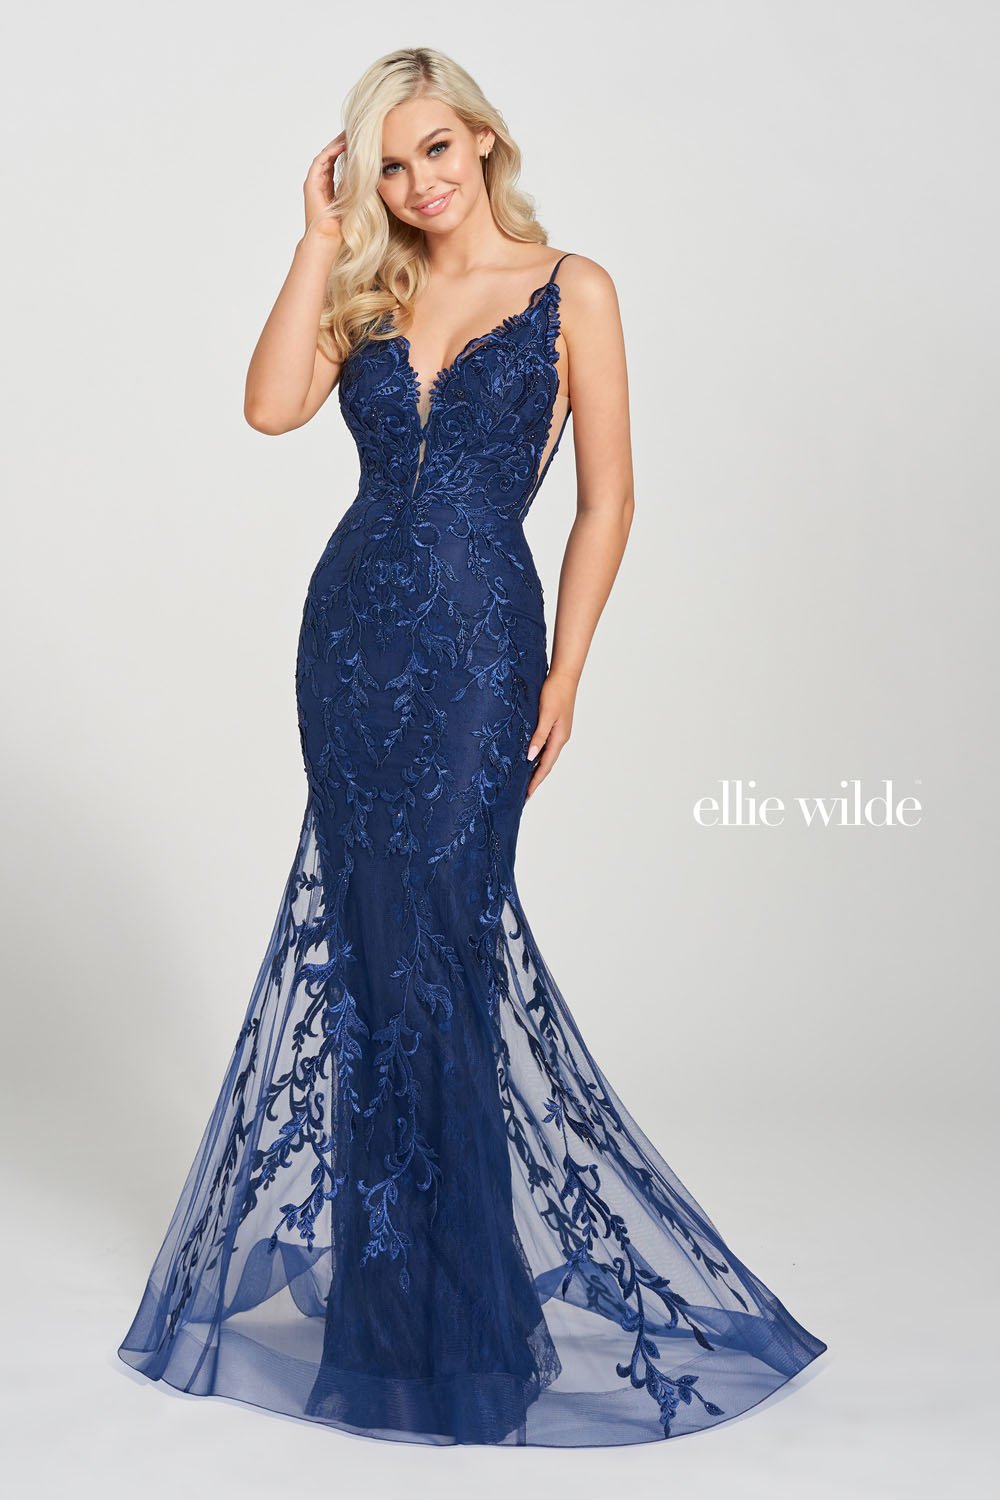 Ellie Wilde Navy Blue EW122101 Prom Dress Image.  Navy Blue formal dress.